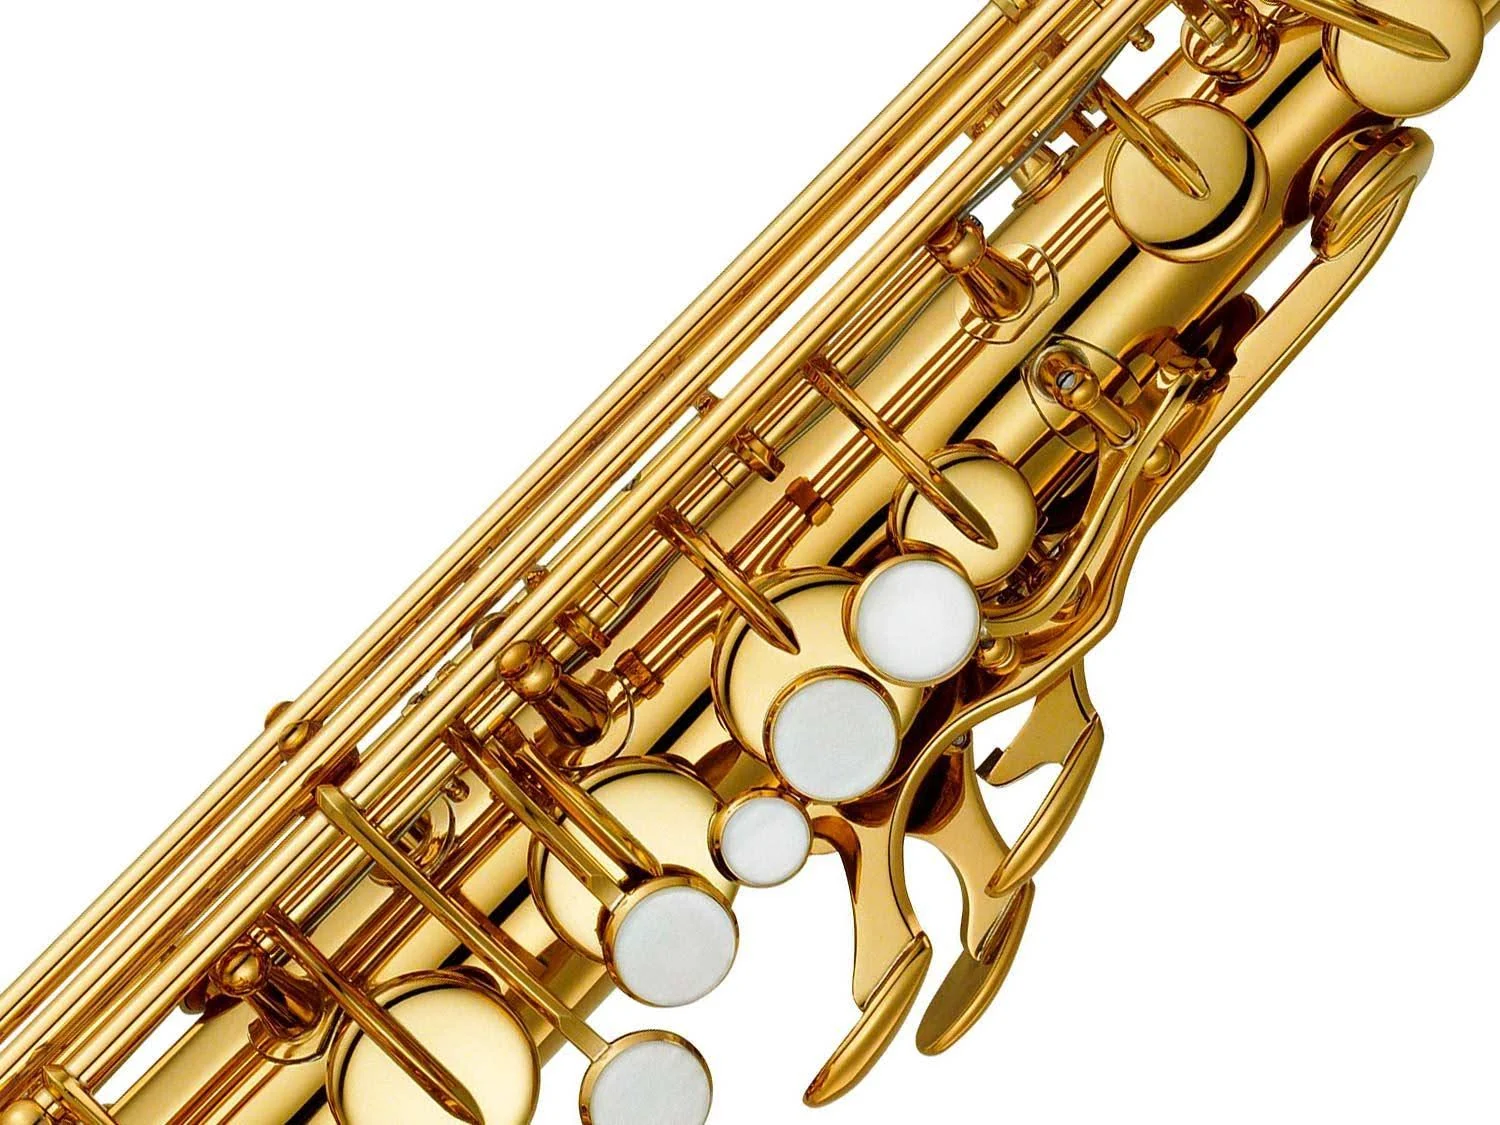 Saxophone Yamaha YAS-280